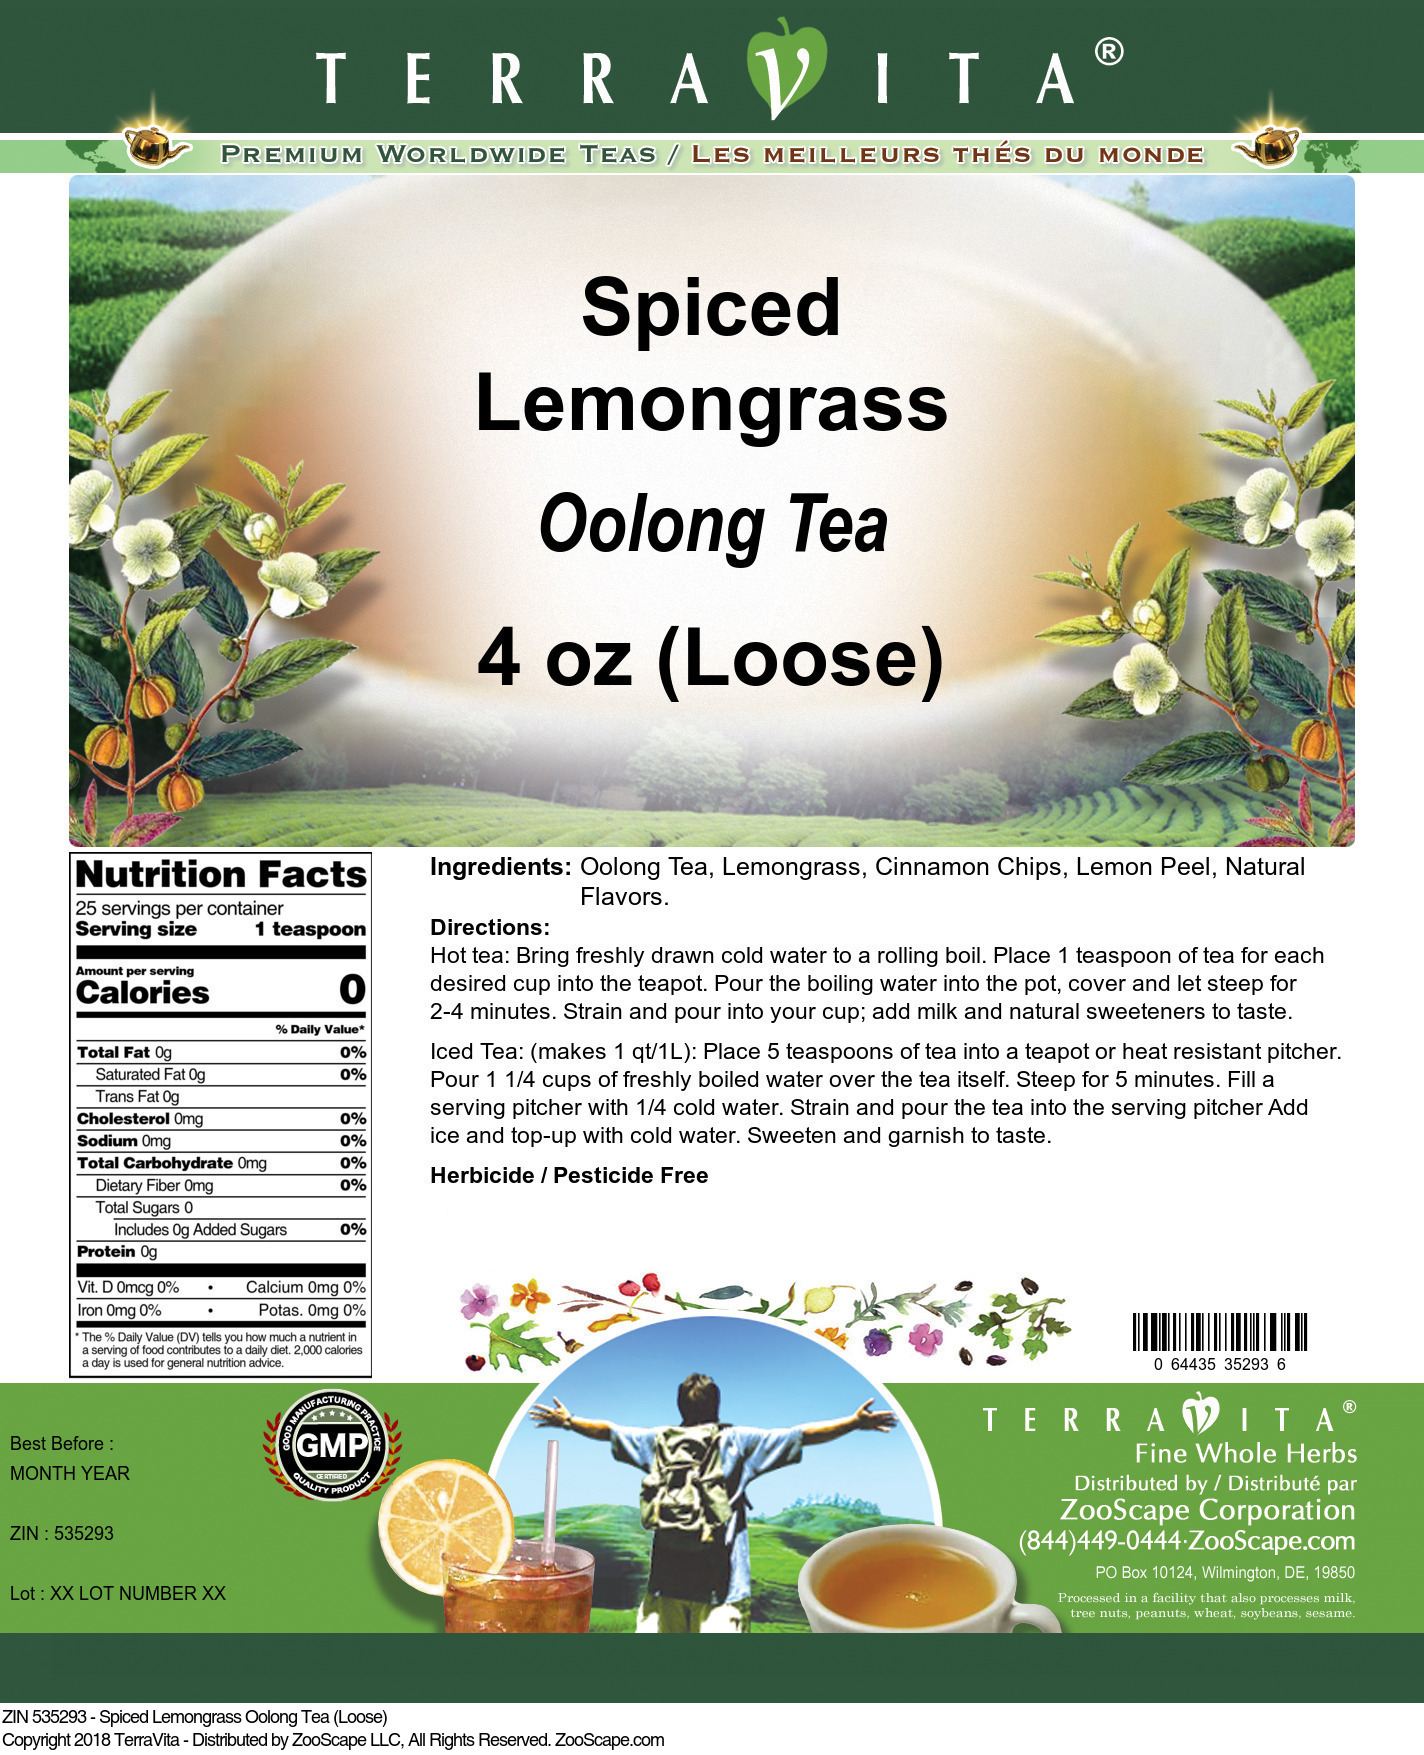 Spiced Lemongrass Oolong Tea (Loose) - Label